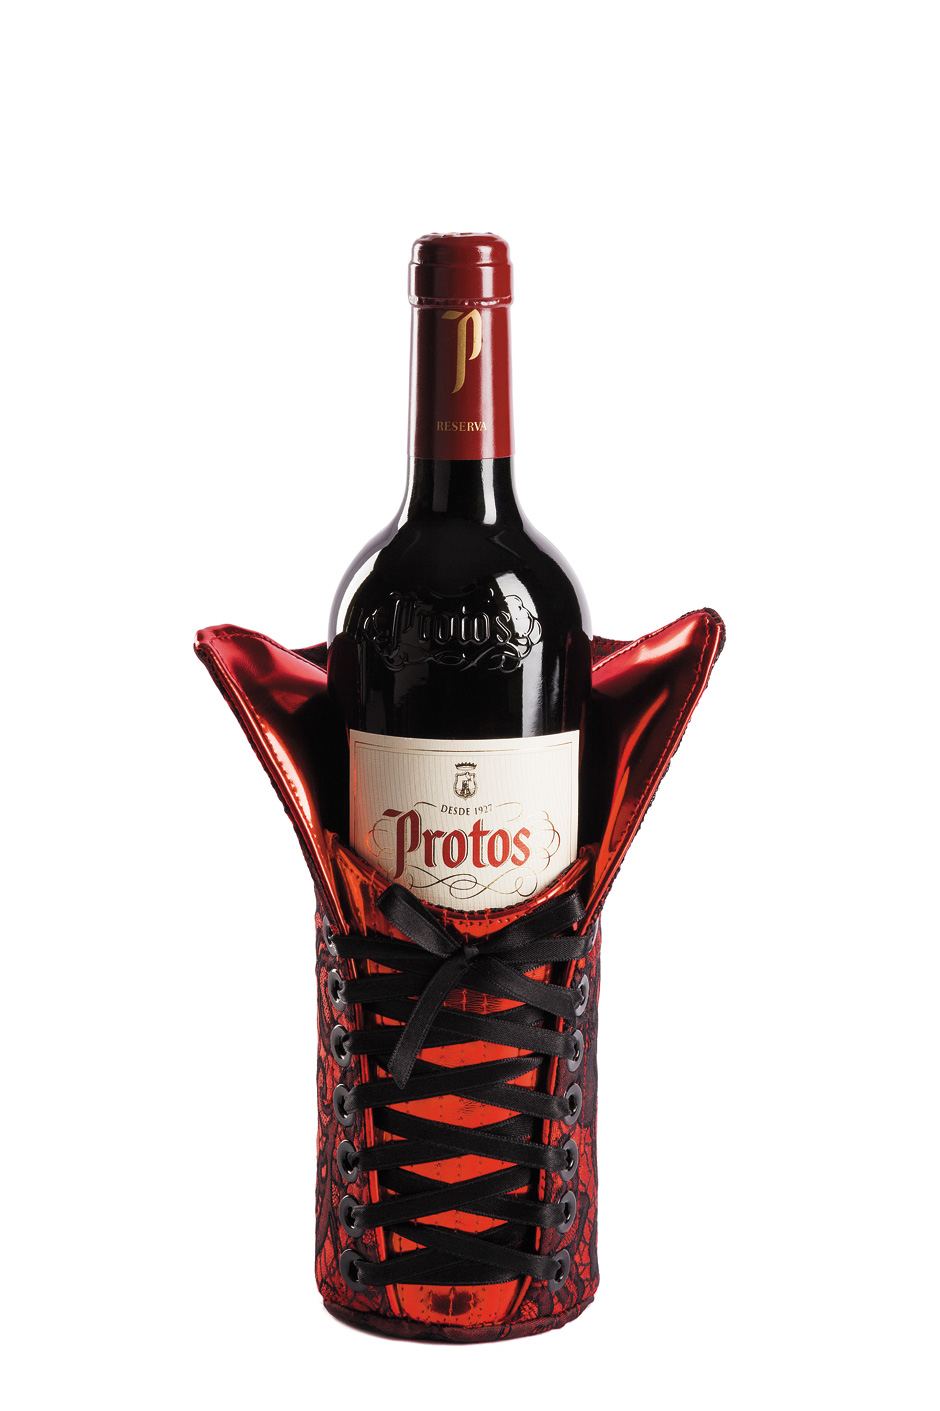 The Protos Reserva wine Christmas packaging has been the work of the designer Maya Hansen